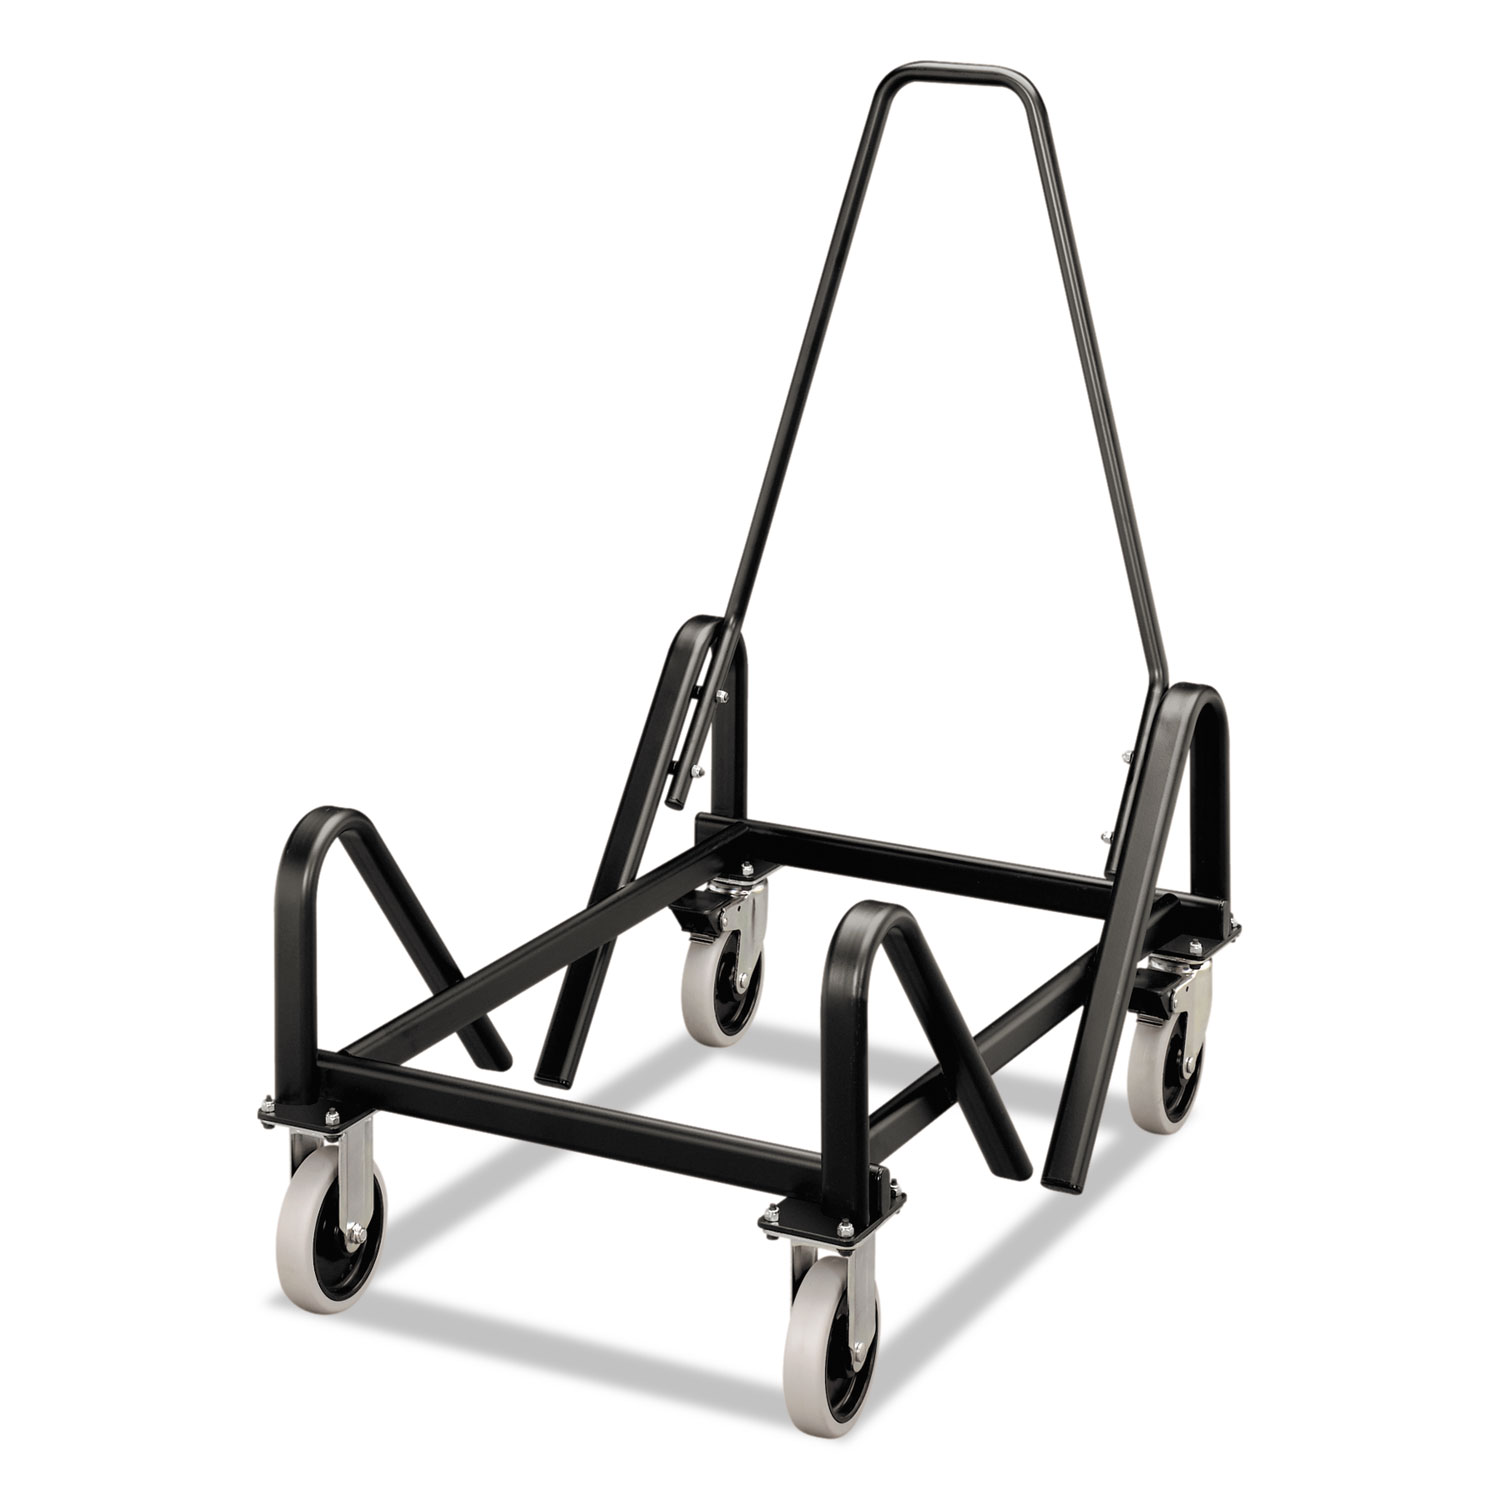 Olson Stacker Series Cart, 21-3/8 x 35-1/2 x 37, Black